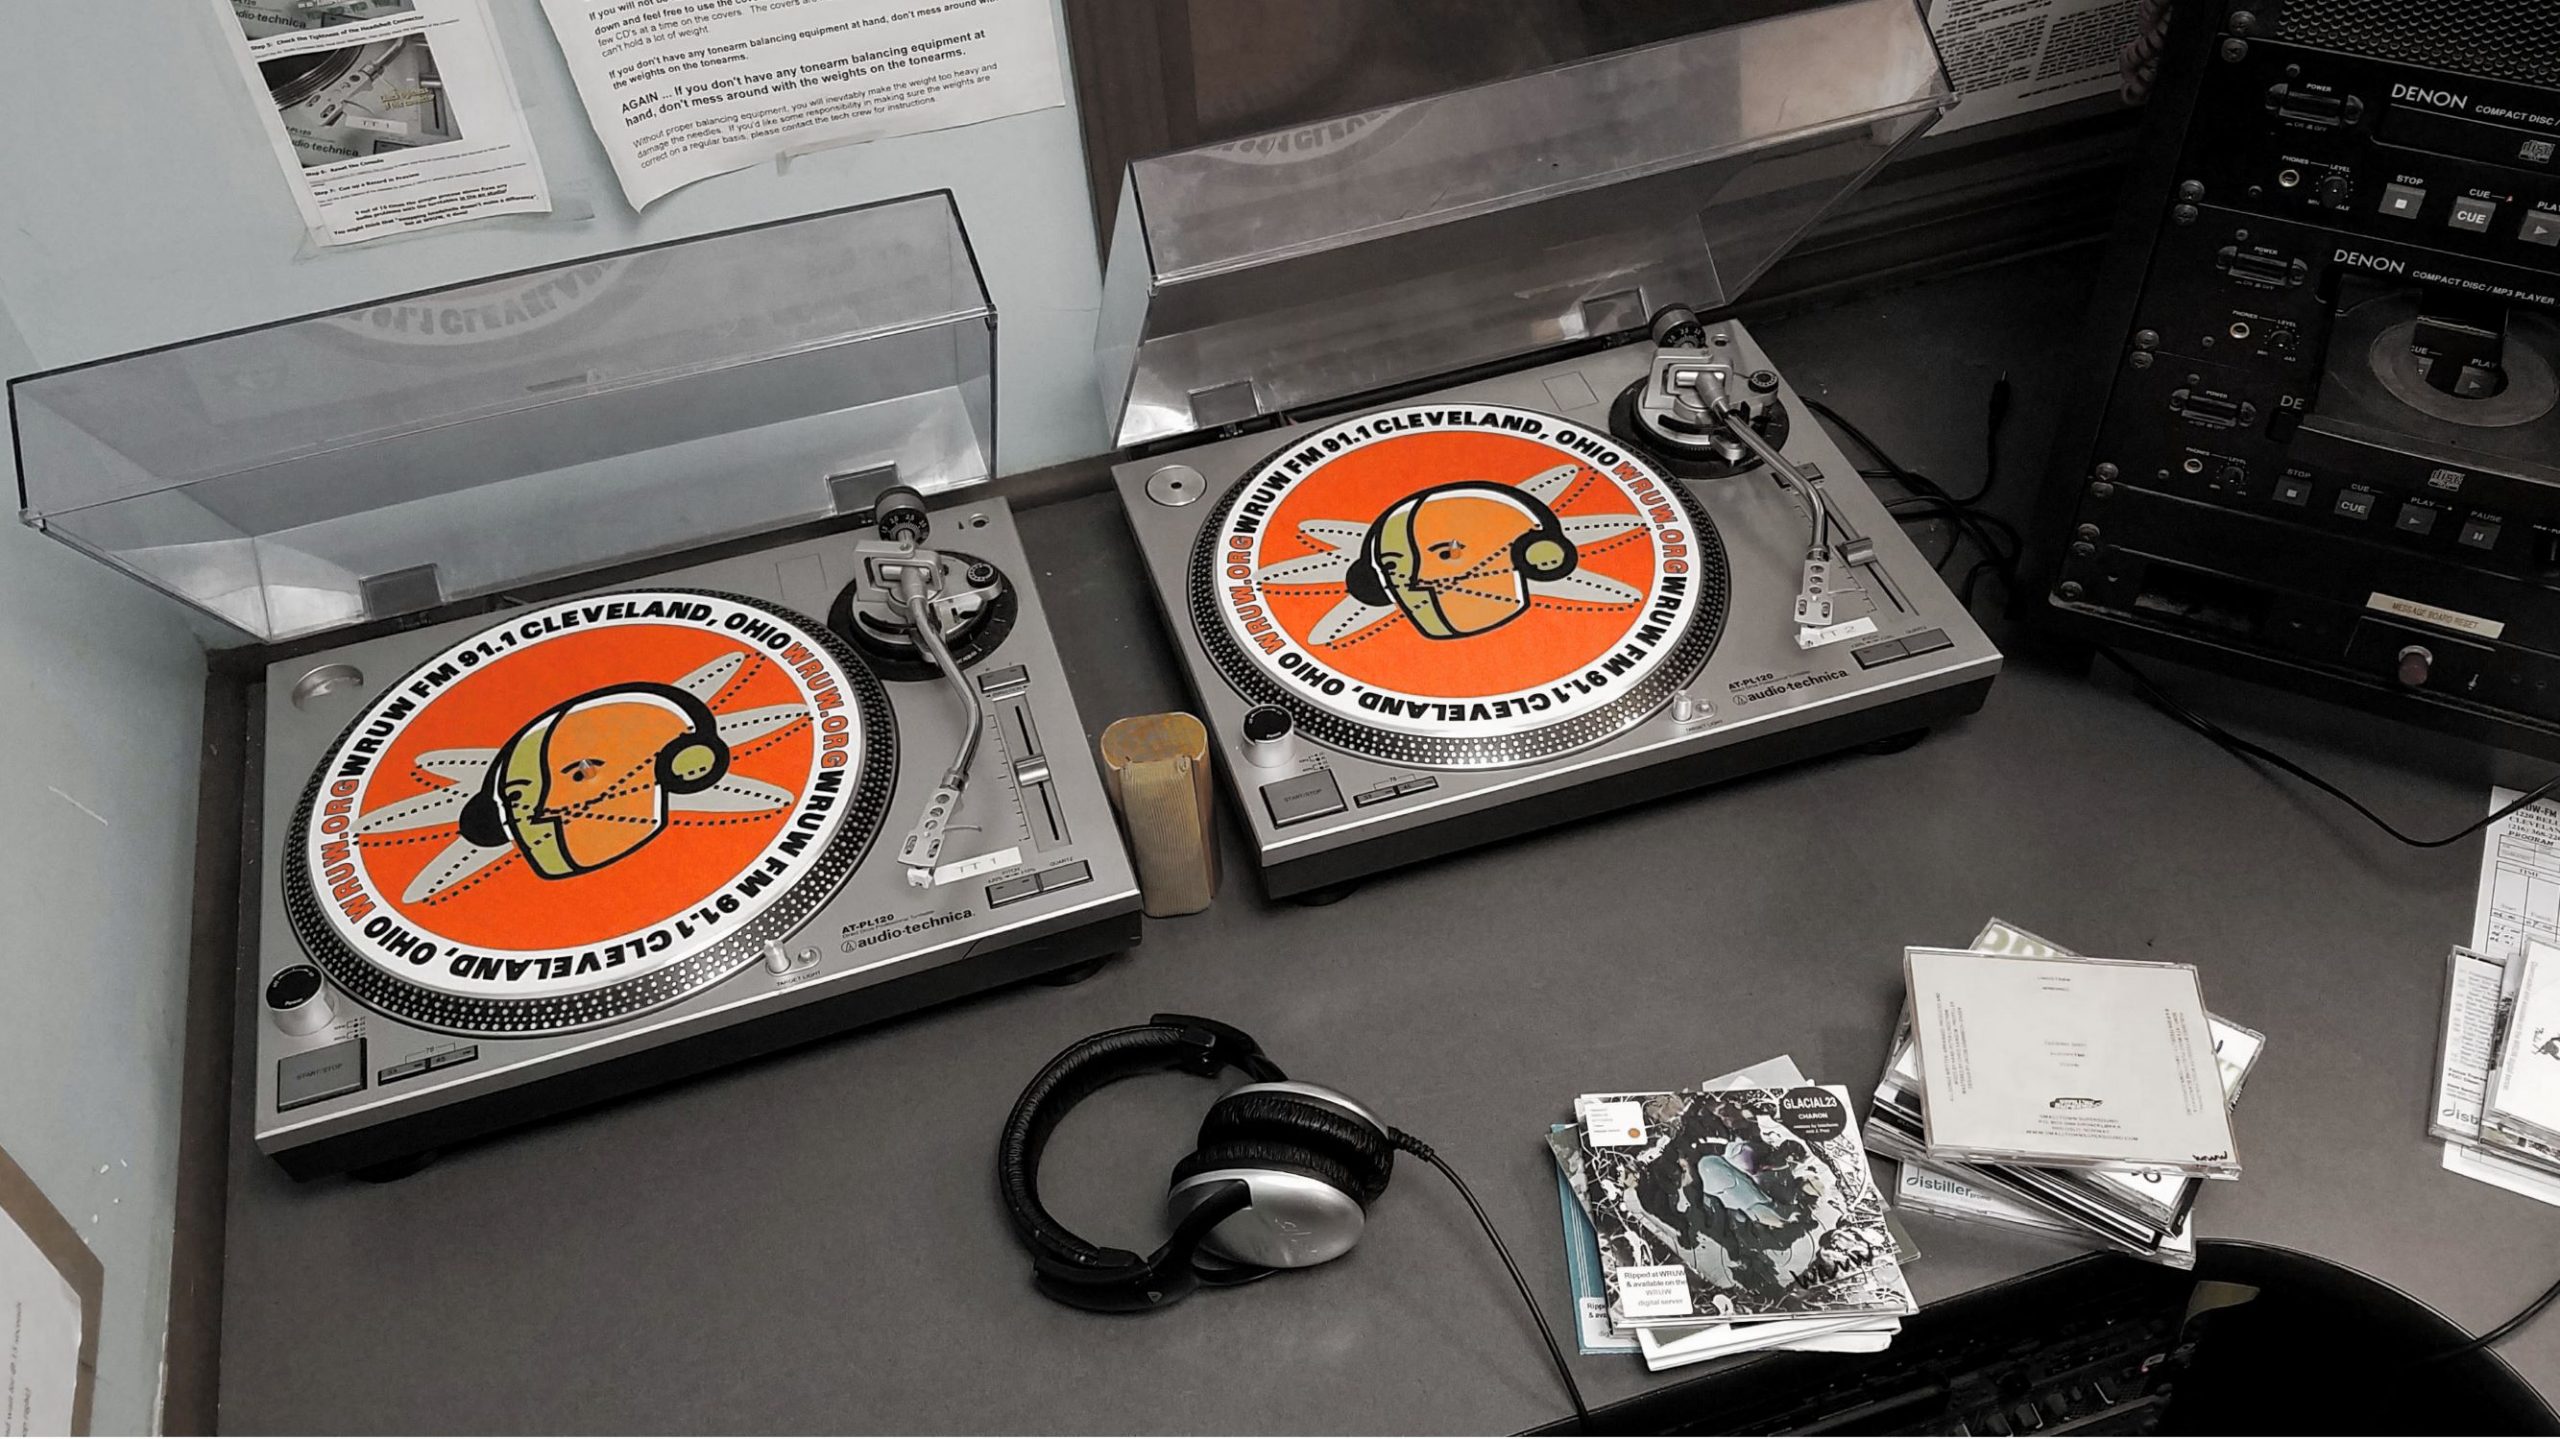 WRUW turntables with visible orange radio head logo